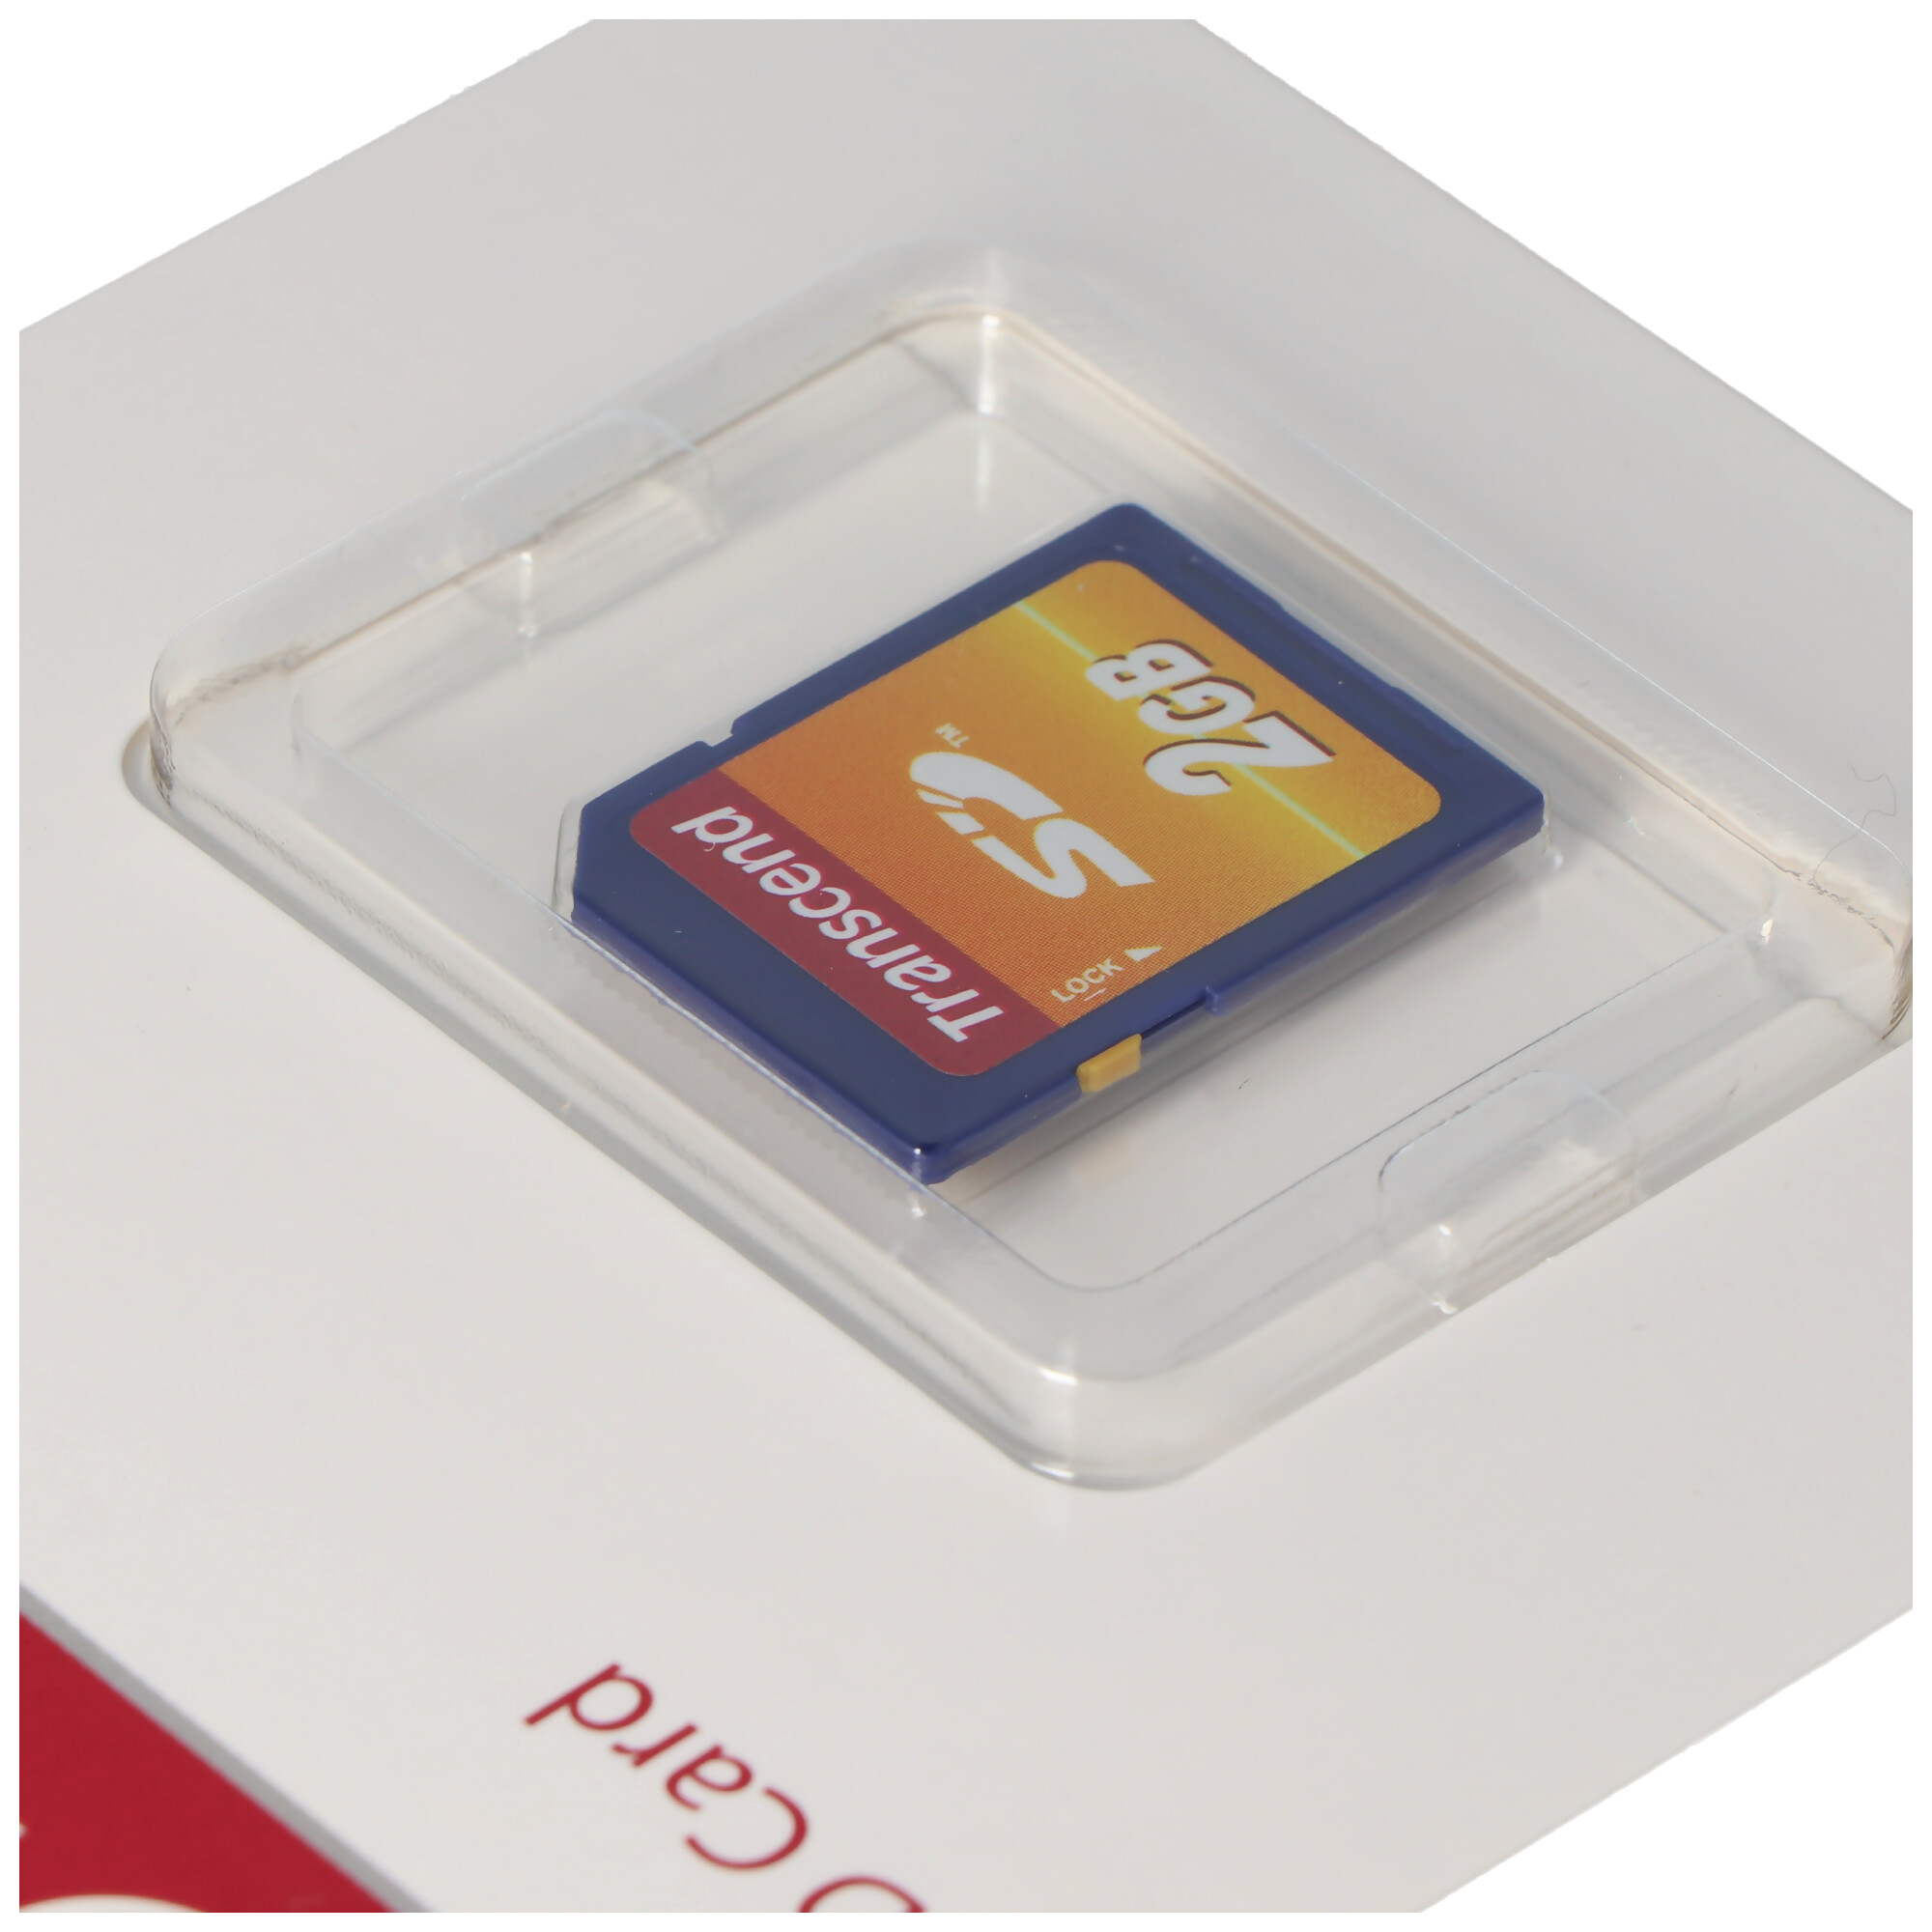 TRANSCEND MC-T5-Z050, 10 2 MB/s Speicherkarte, GB, SD